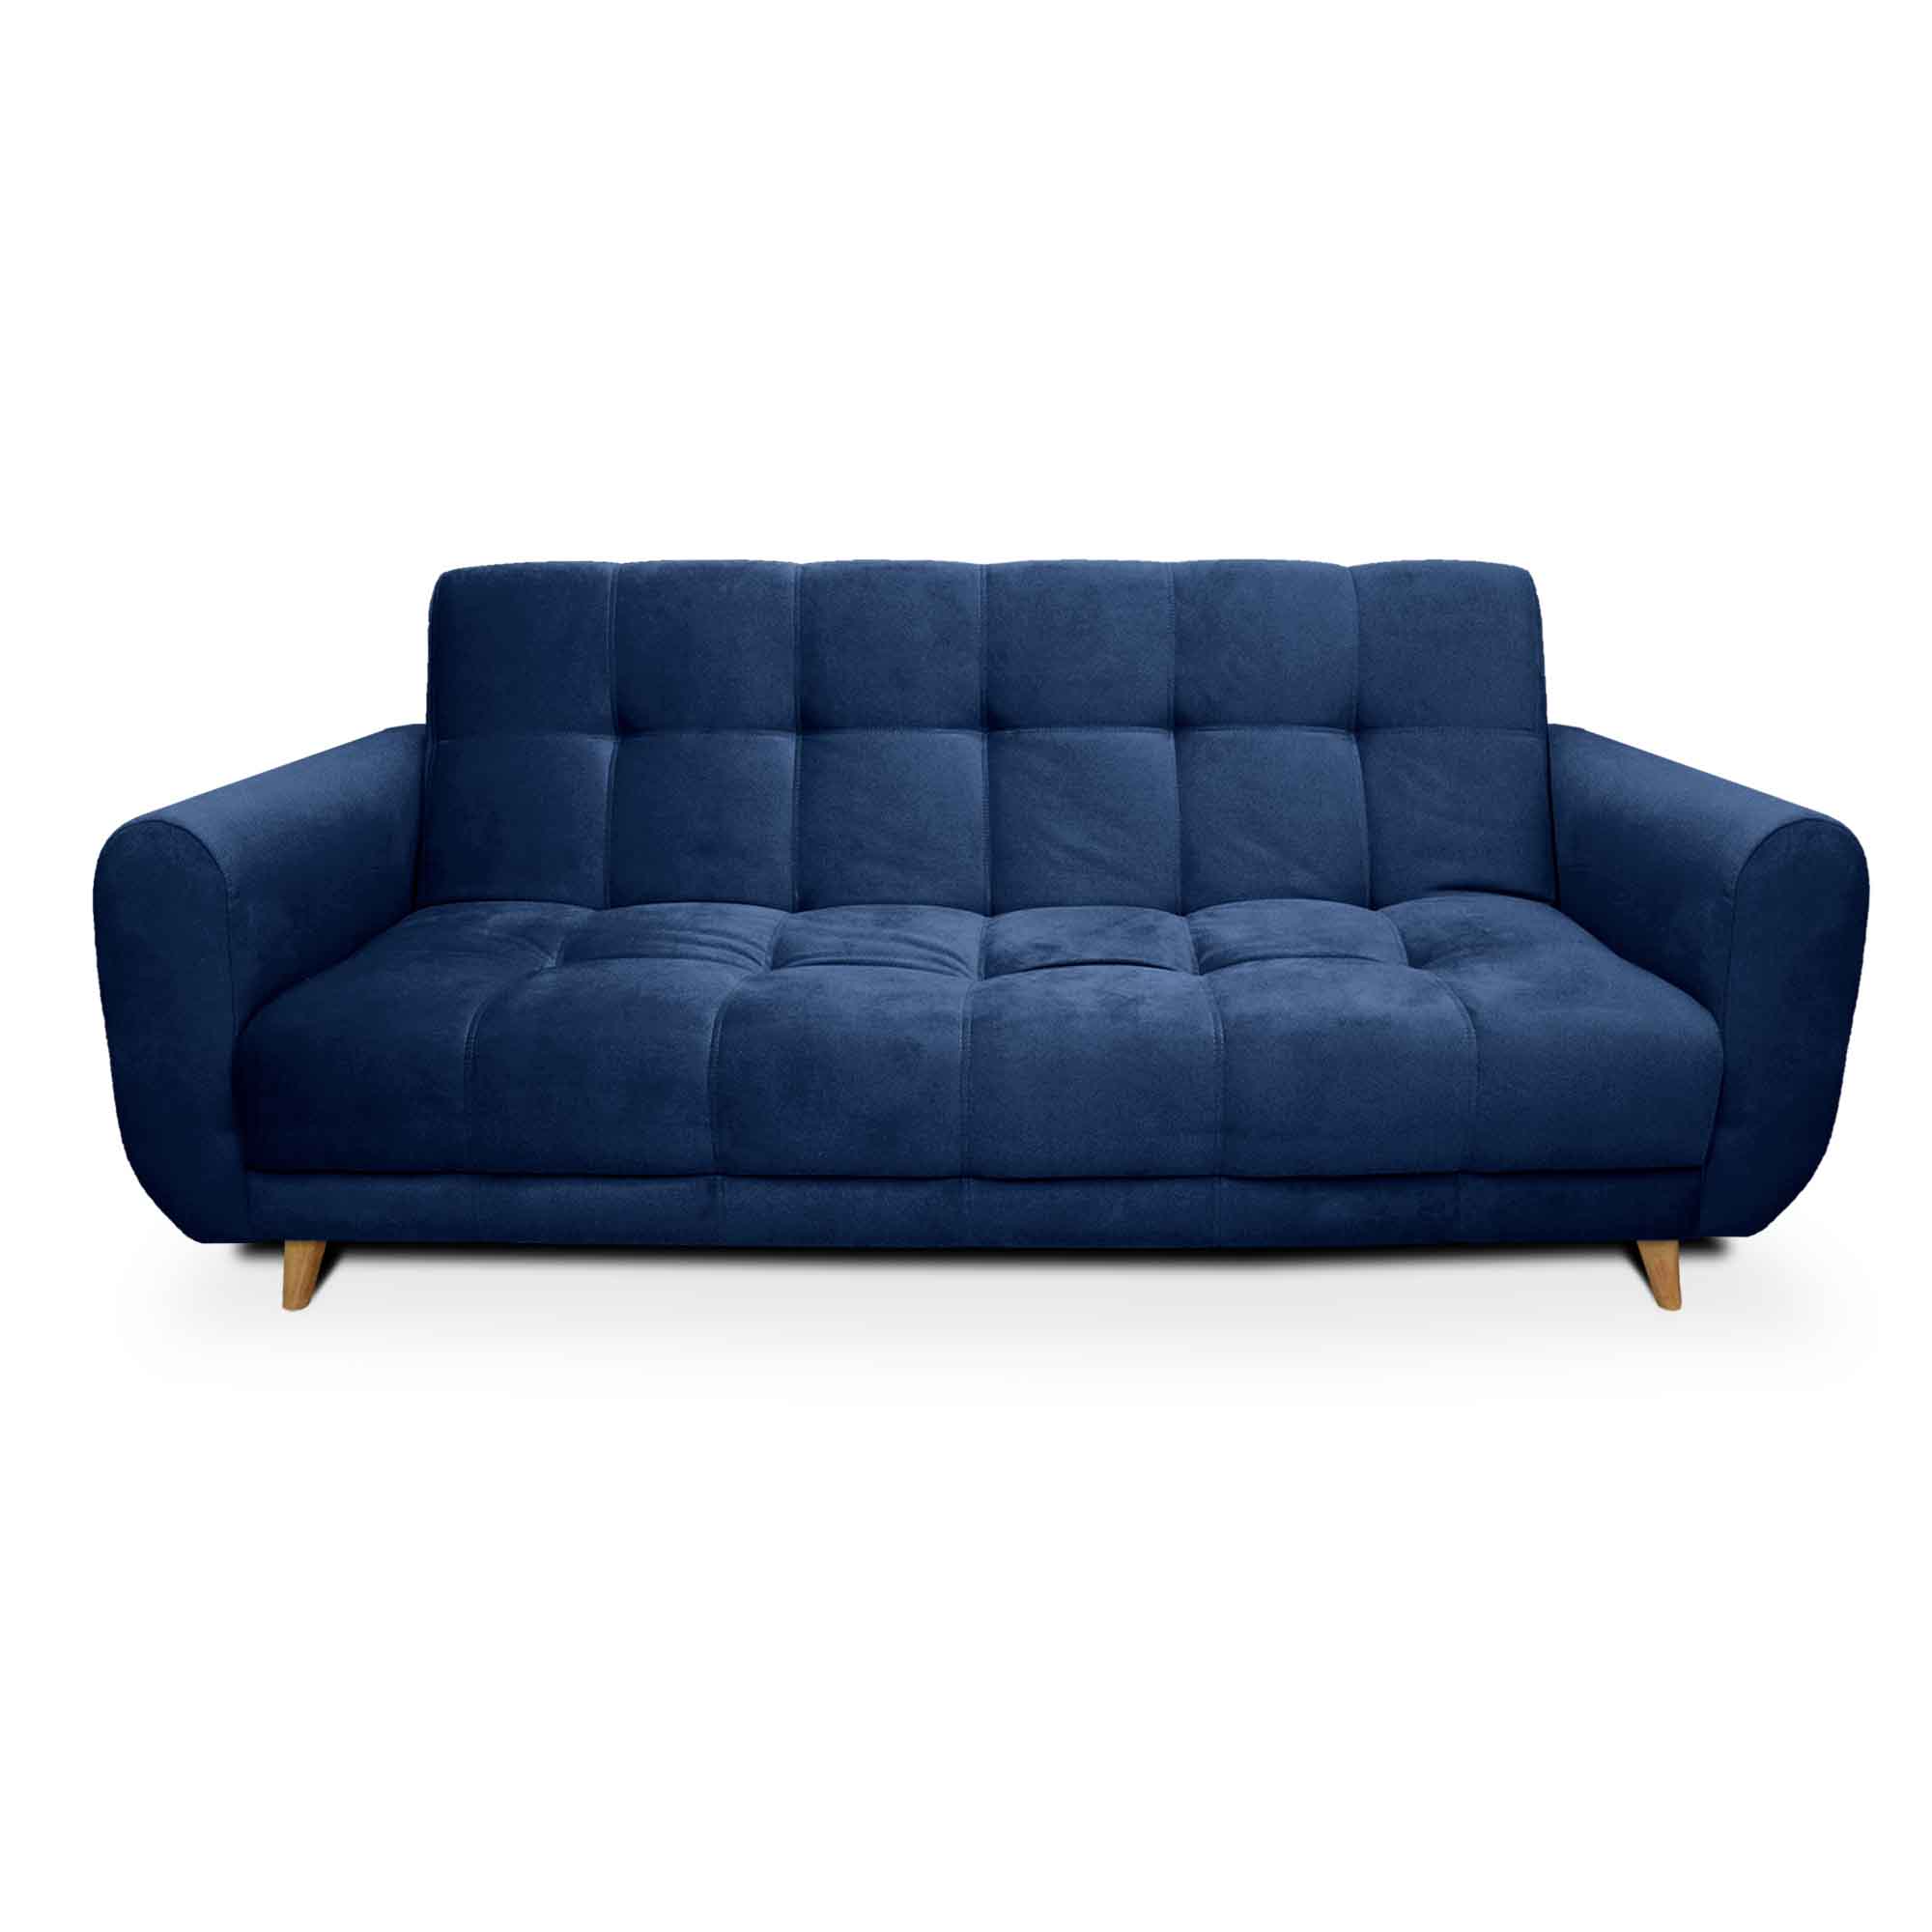 Sofa Cama Comfort Sistema Clic Clac Azul Turqui (2)